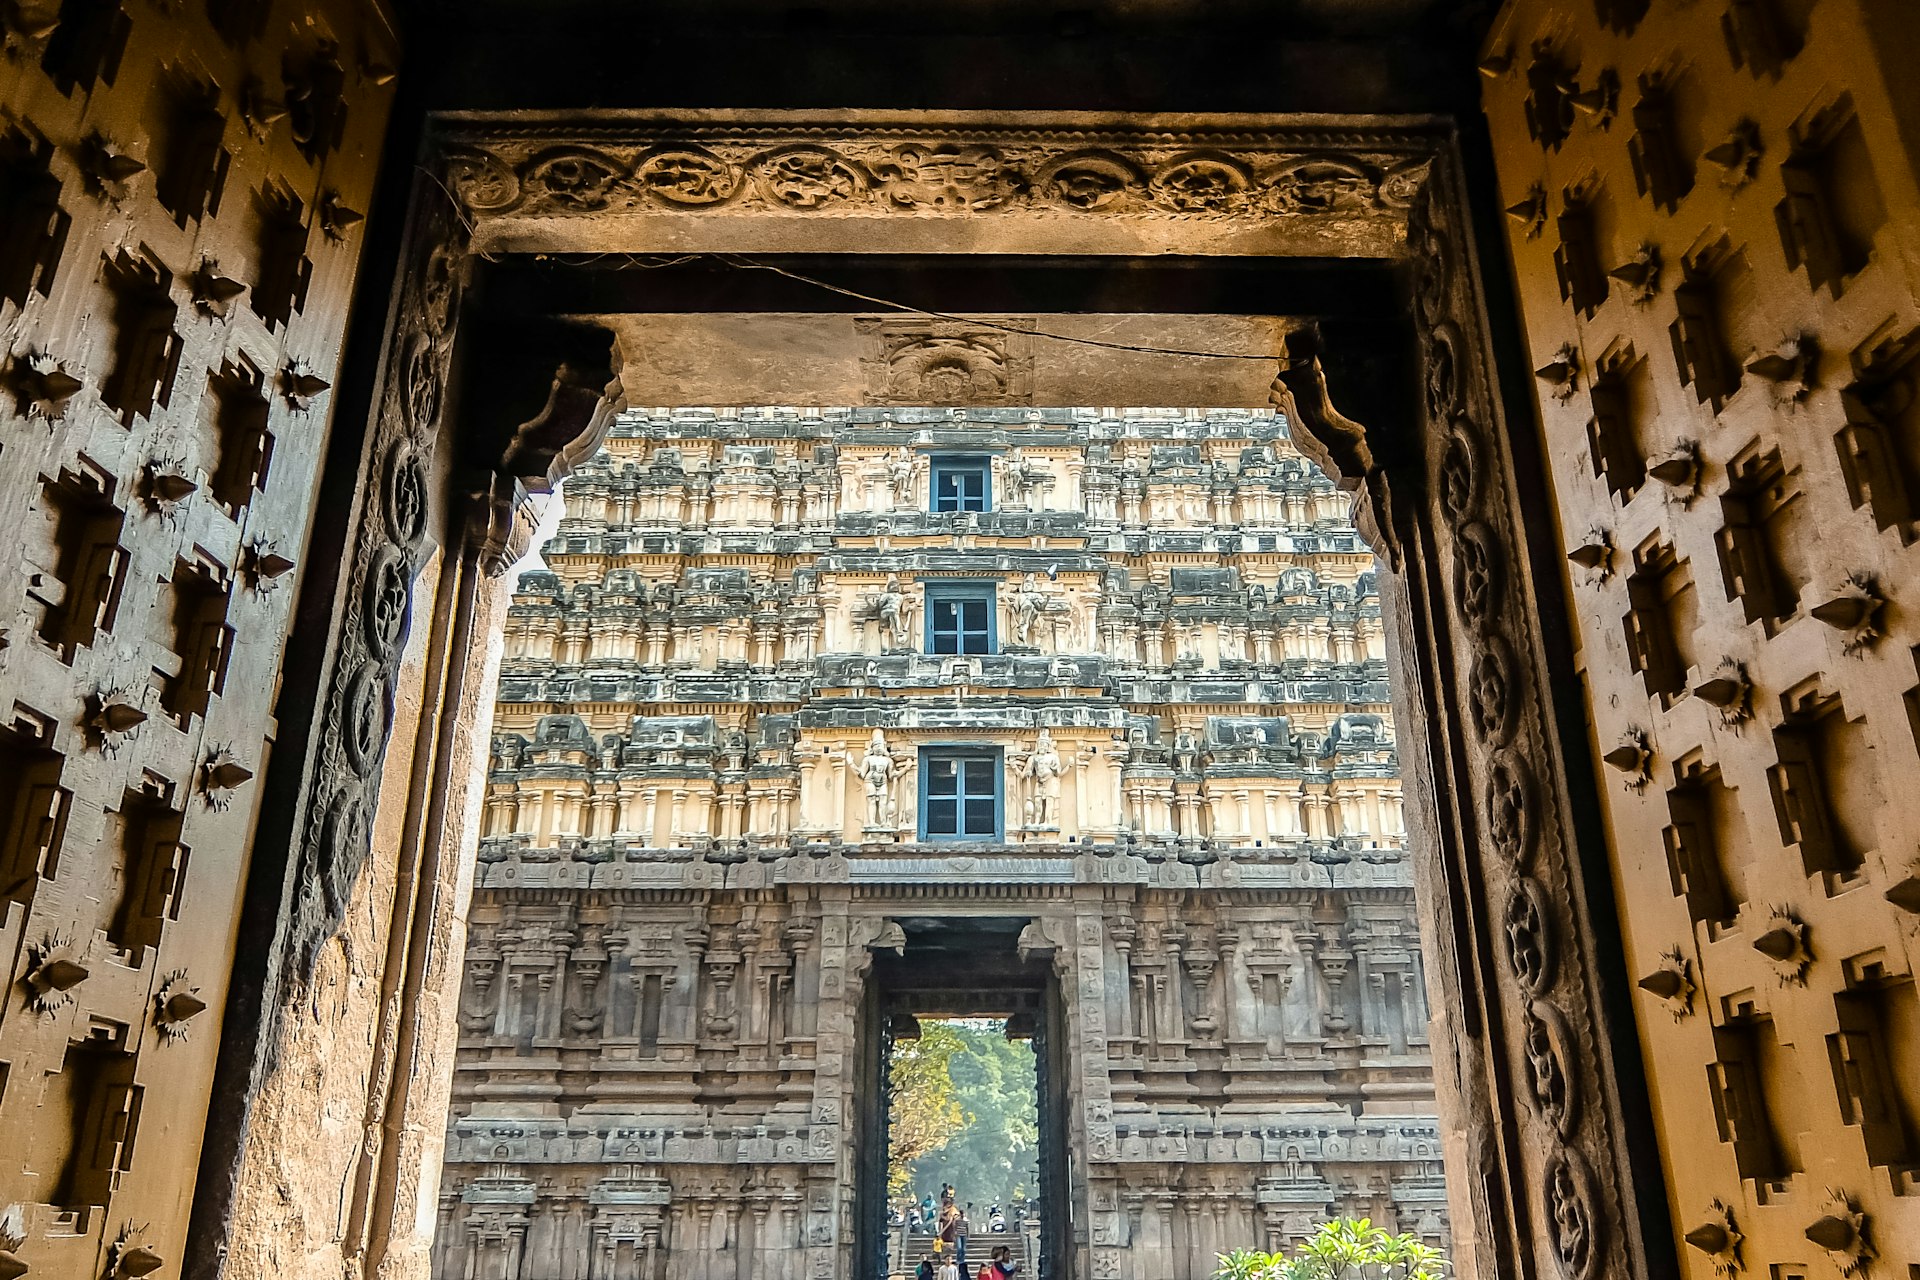 Entrance gates of Sri Jalakandeswarar Temple in Vellore